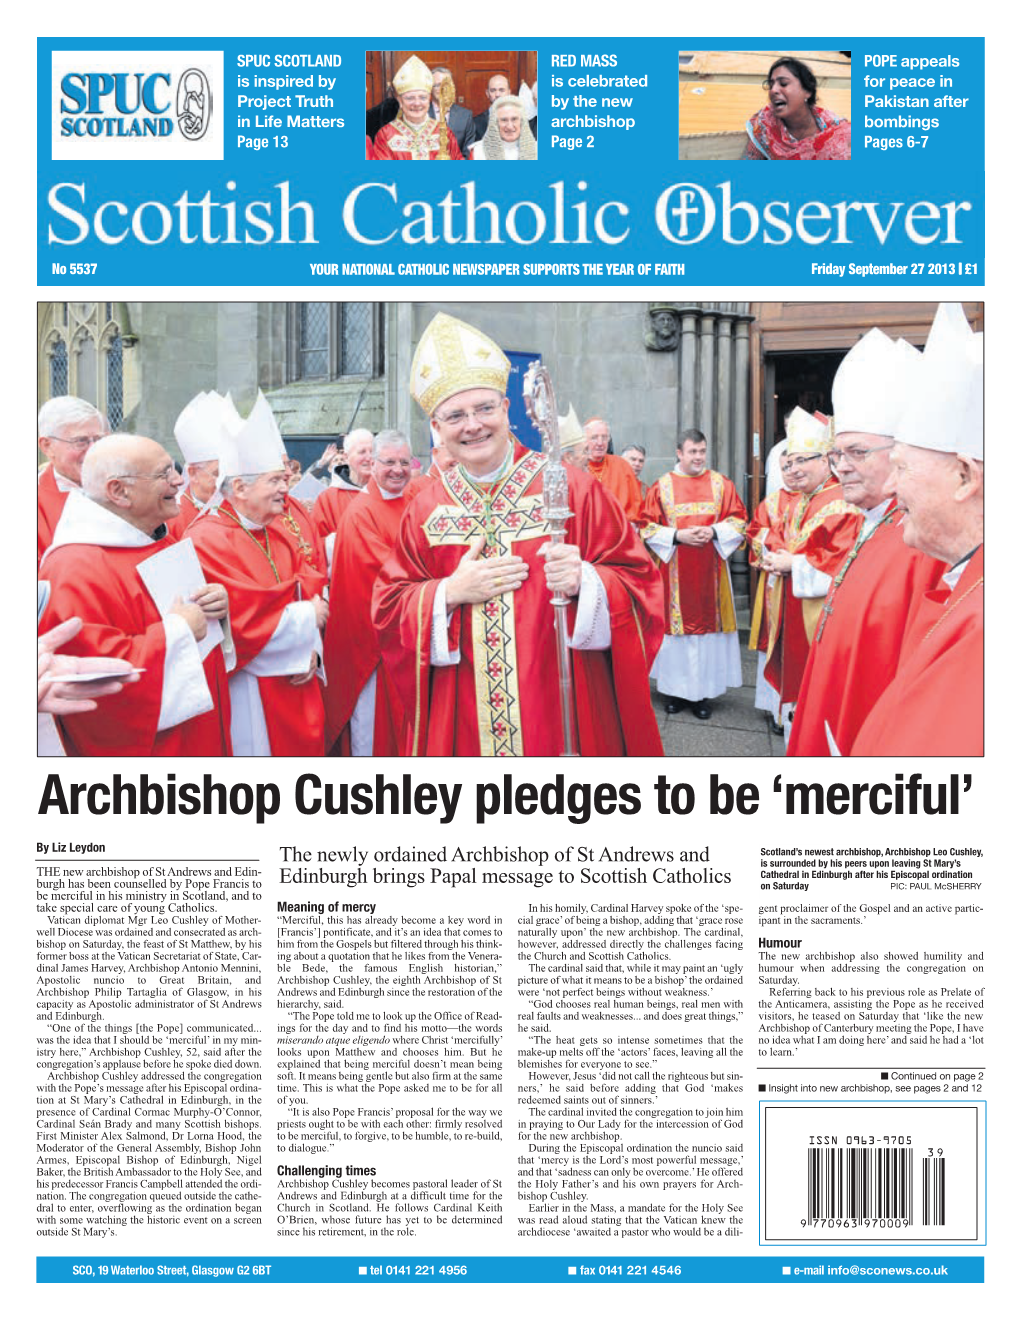 Archbishop Cushley Pledges to Be 'Merciful'